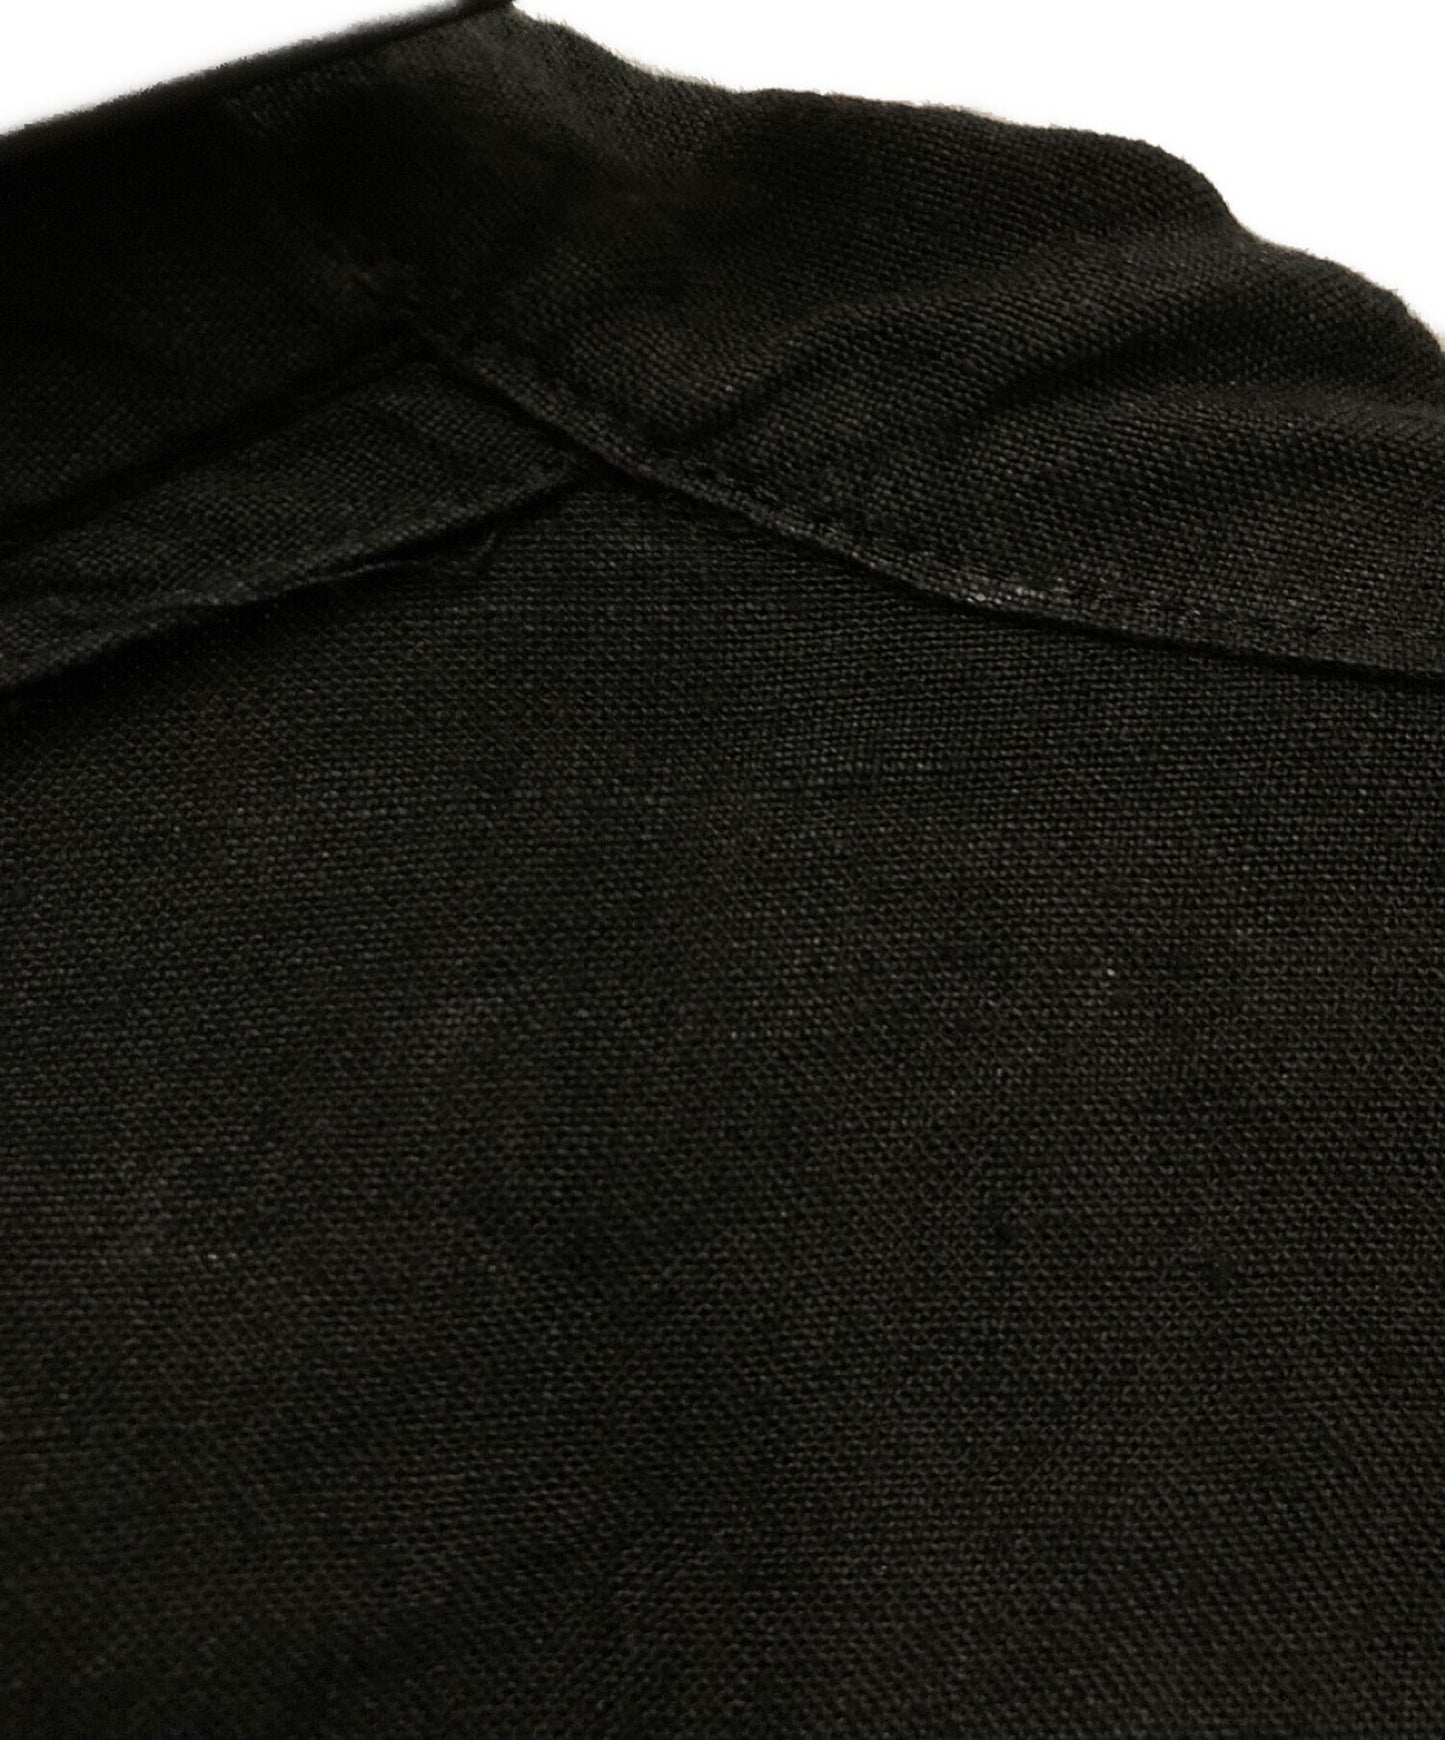 COMME des GARCONS HOMME OLD] 90's 3B Linen Tailored Jacket / Switched Linen Tailored Jacket HJ-02013M AD1994